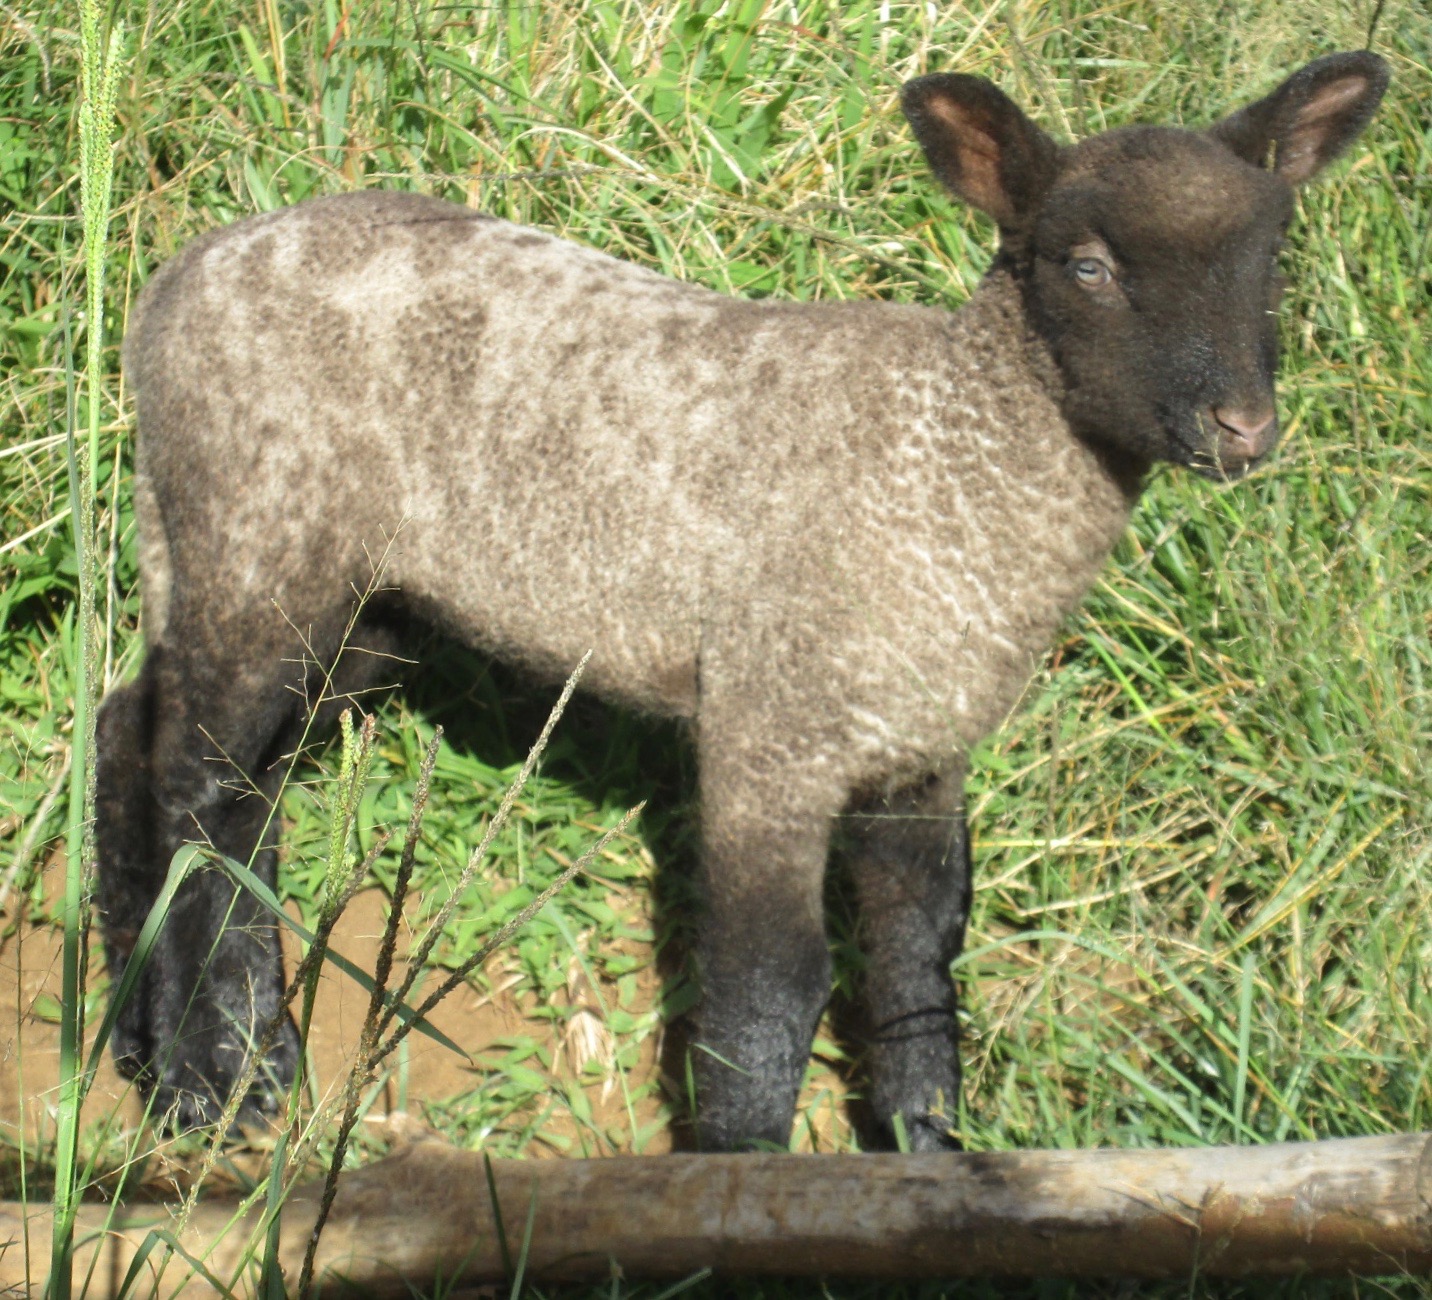 Lacy's 2nd born lamb